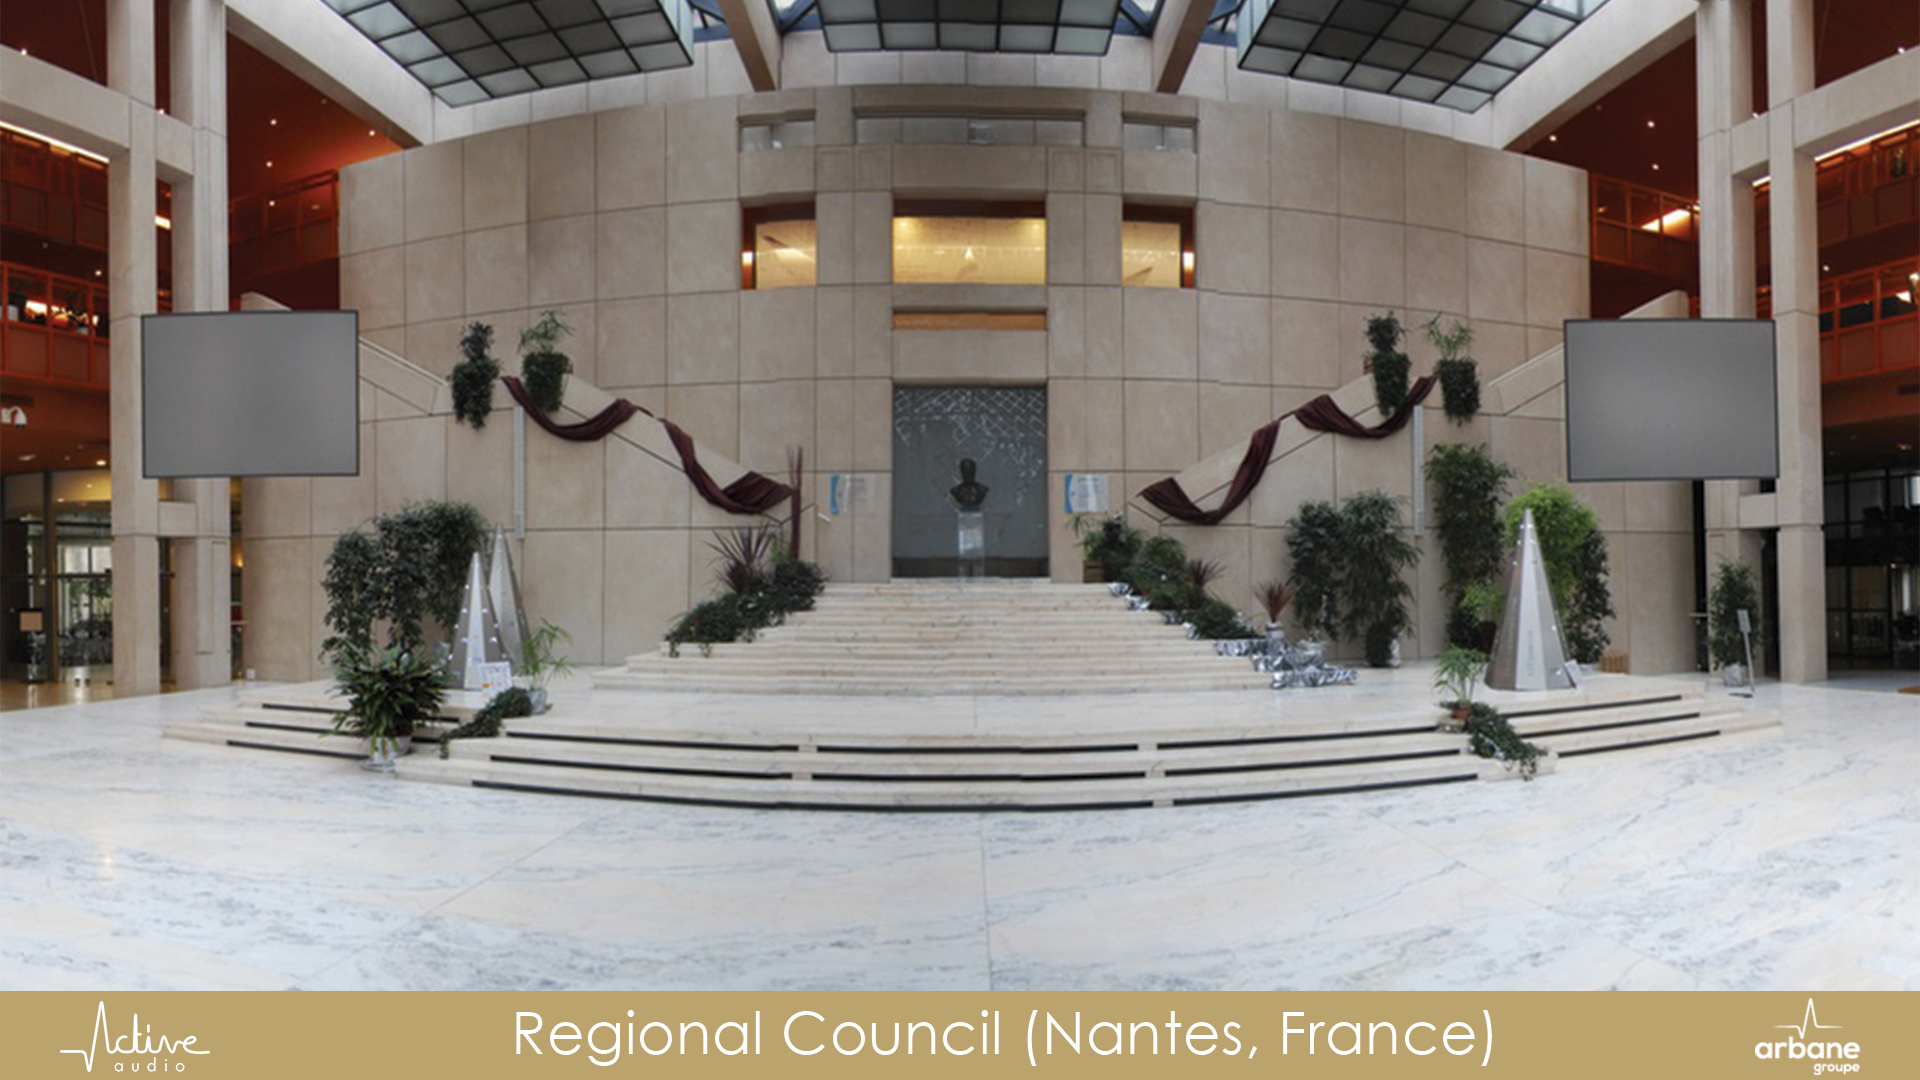 Regional council, Nantes, France